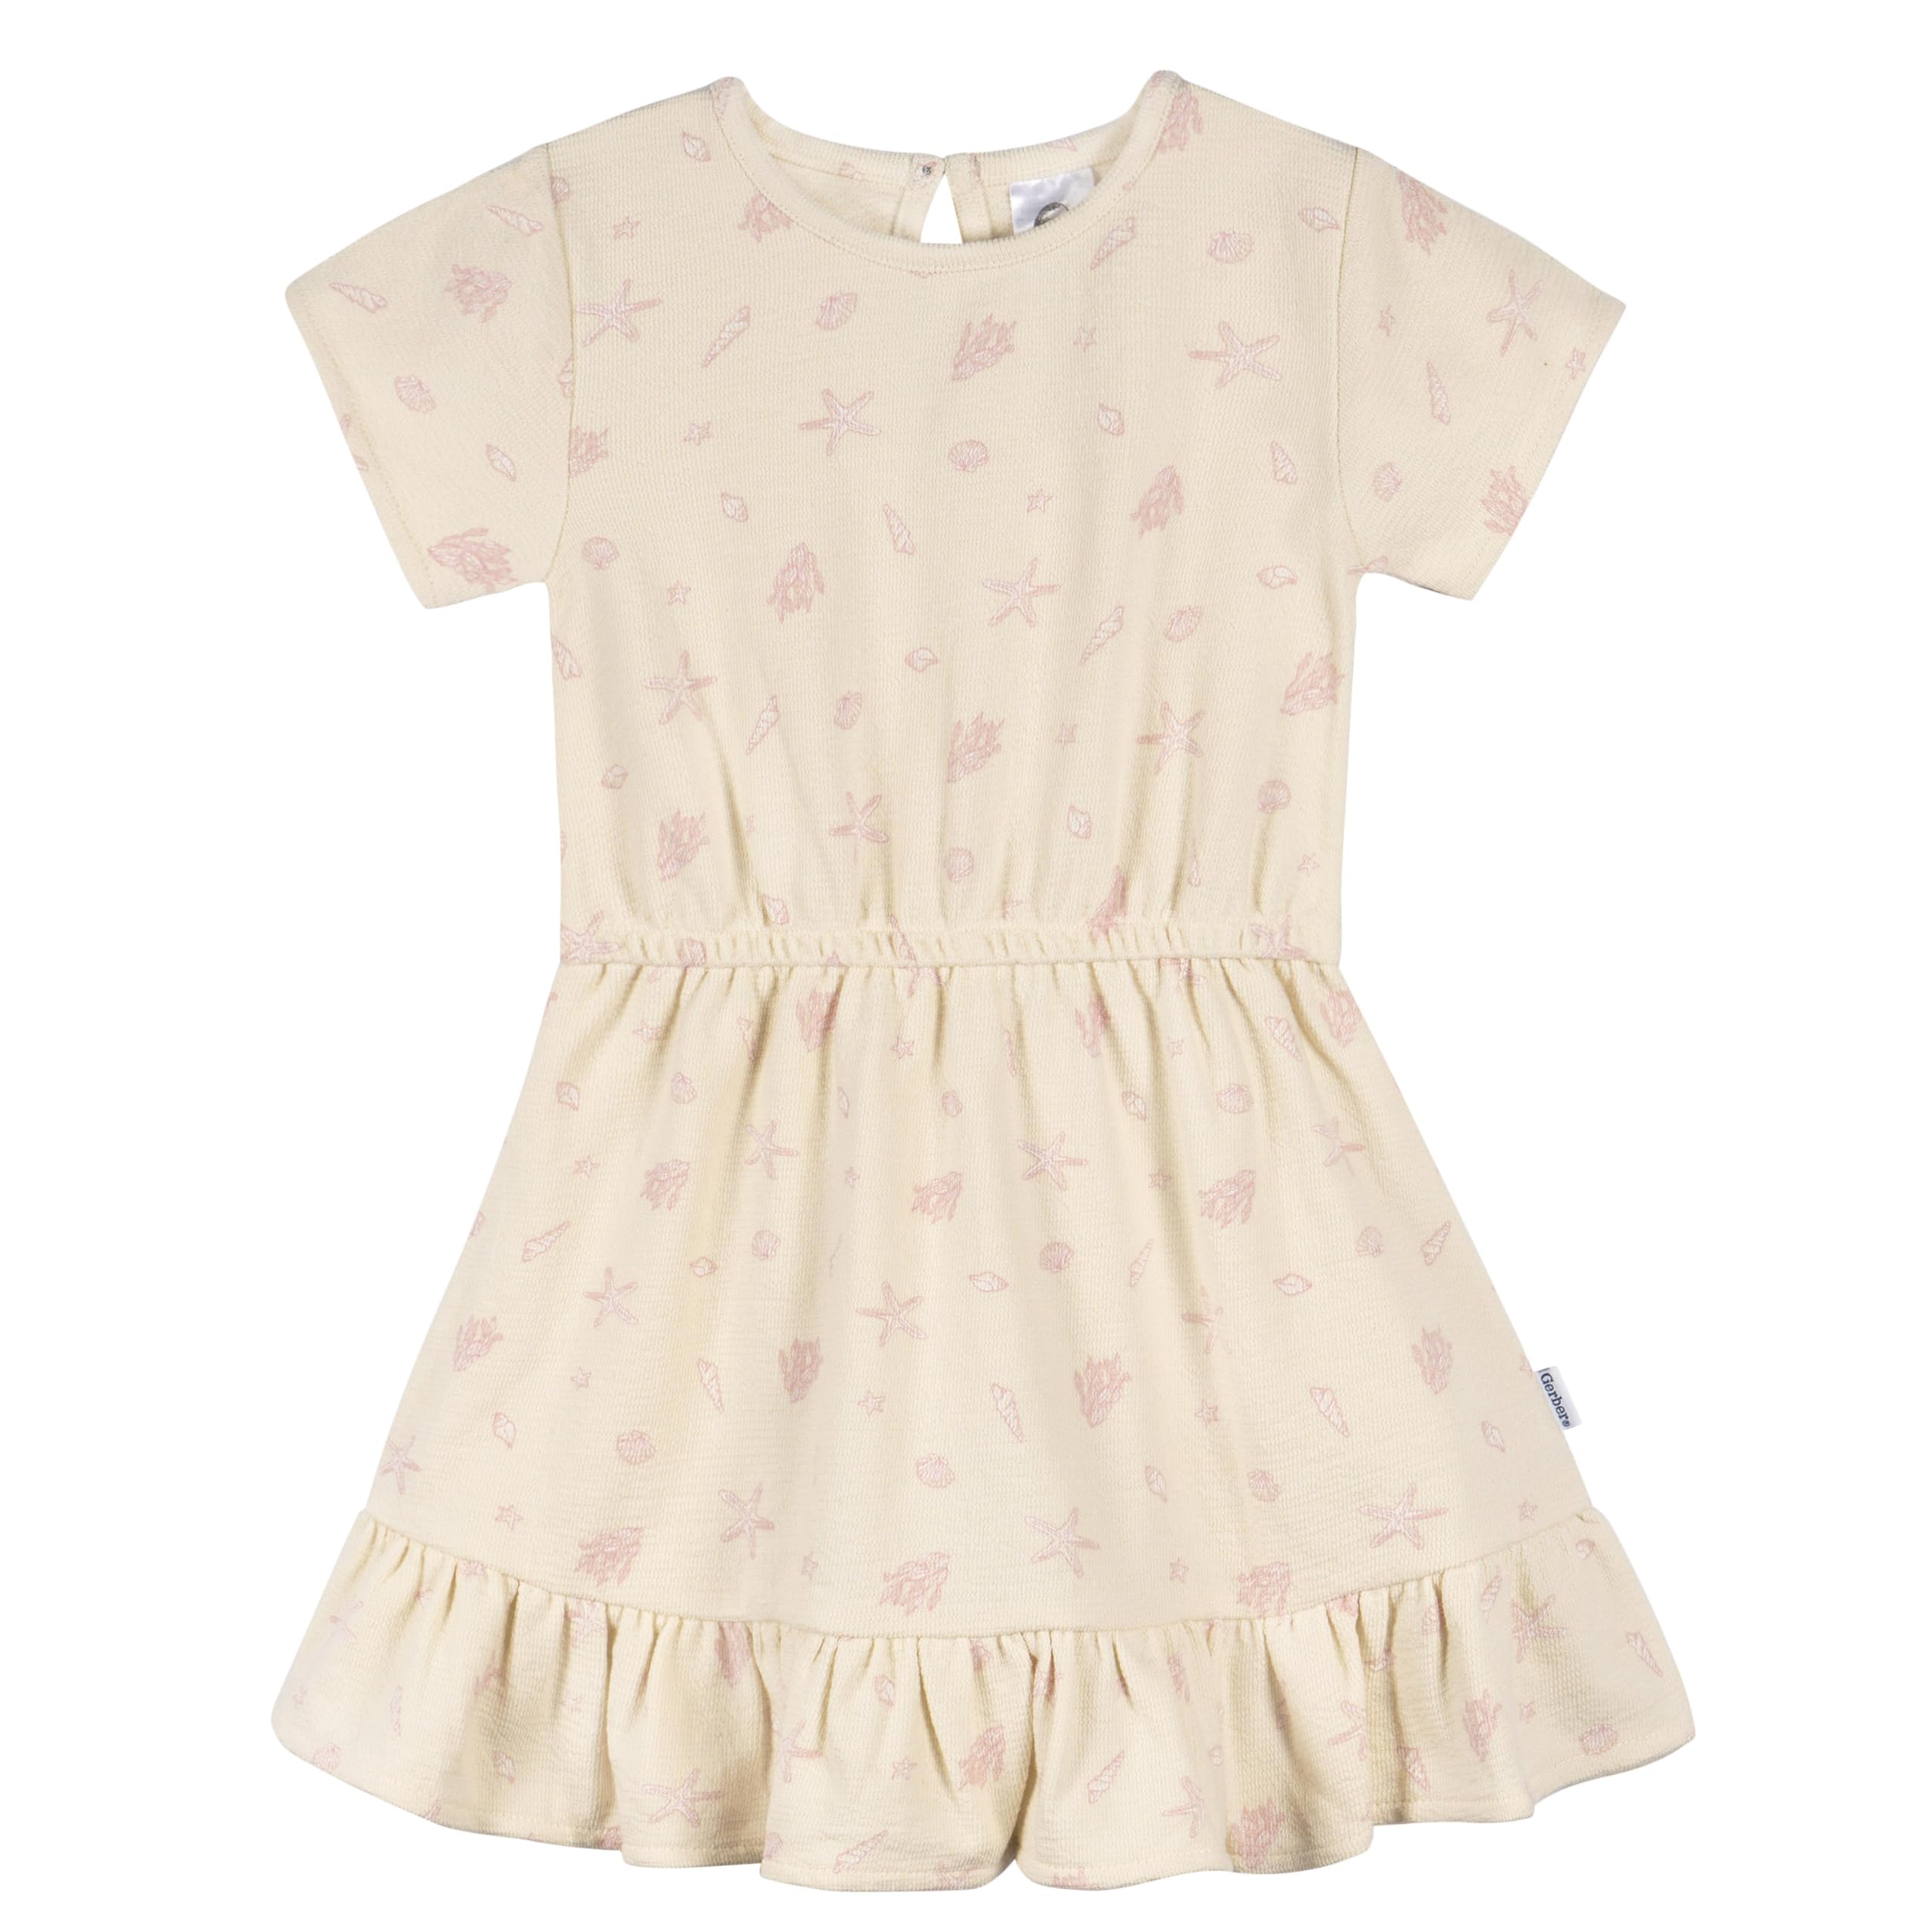 Gerber Girls' Toddler Short-Sleeve Dress, Seashells